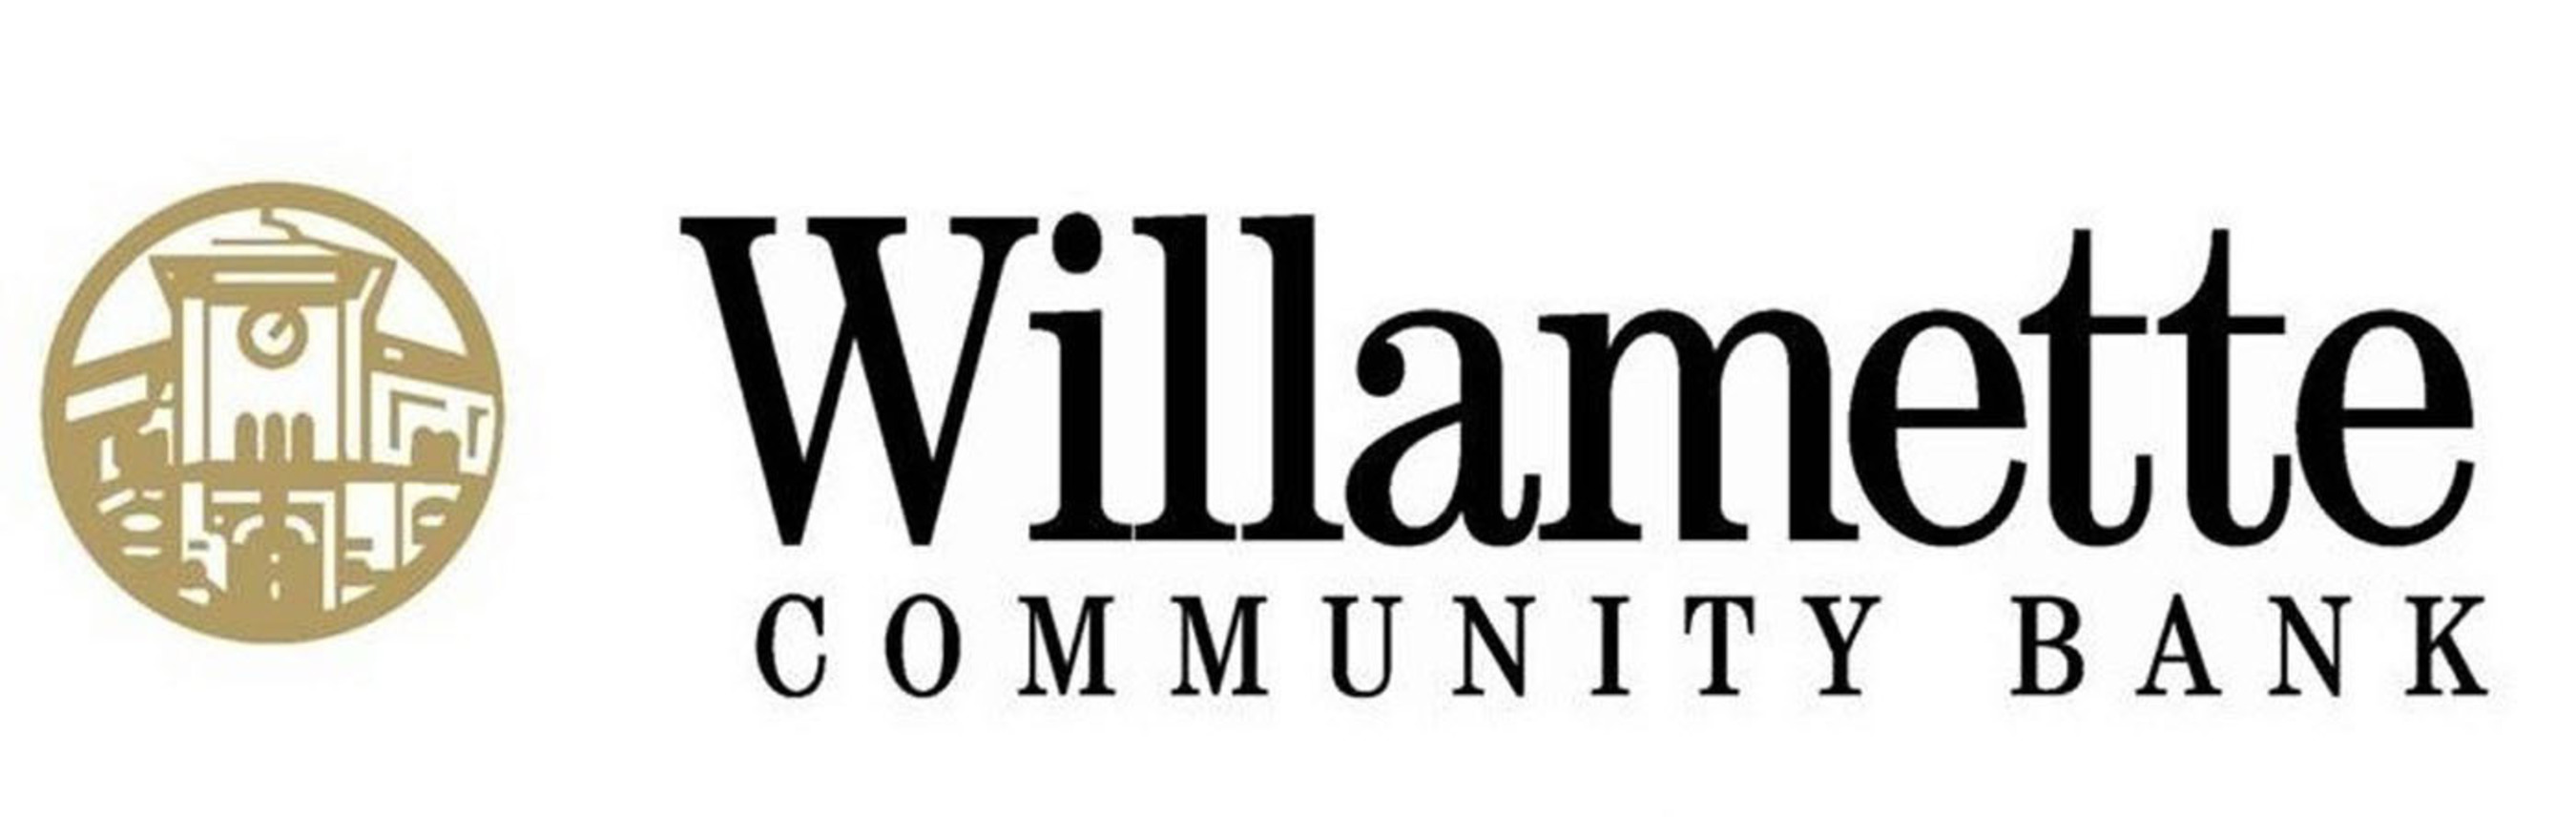 www.willamettecommunitybank.com.